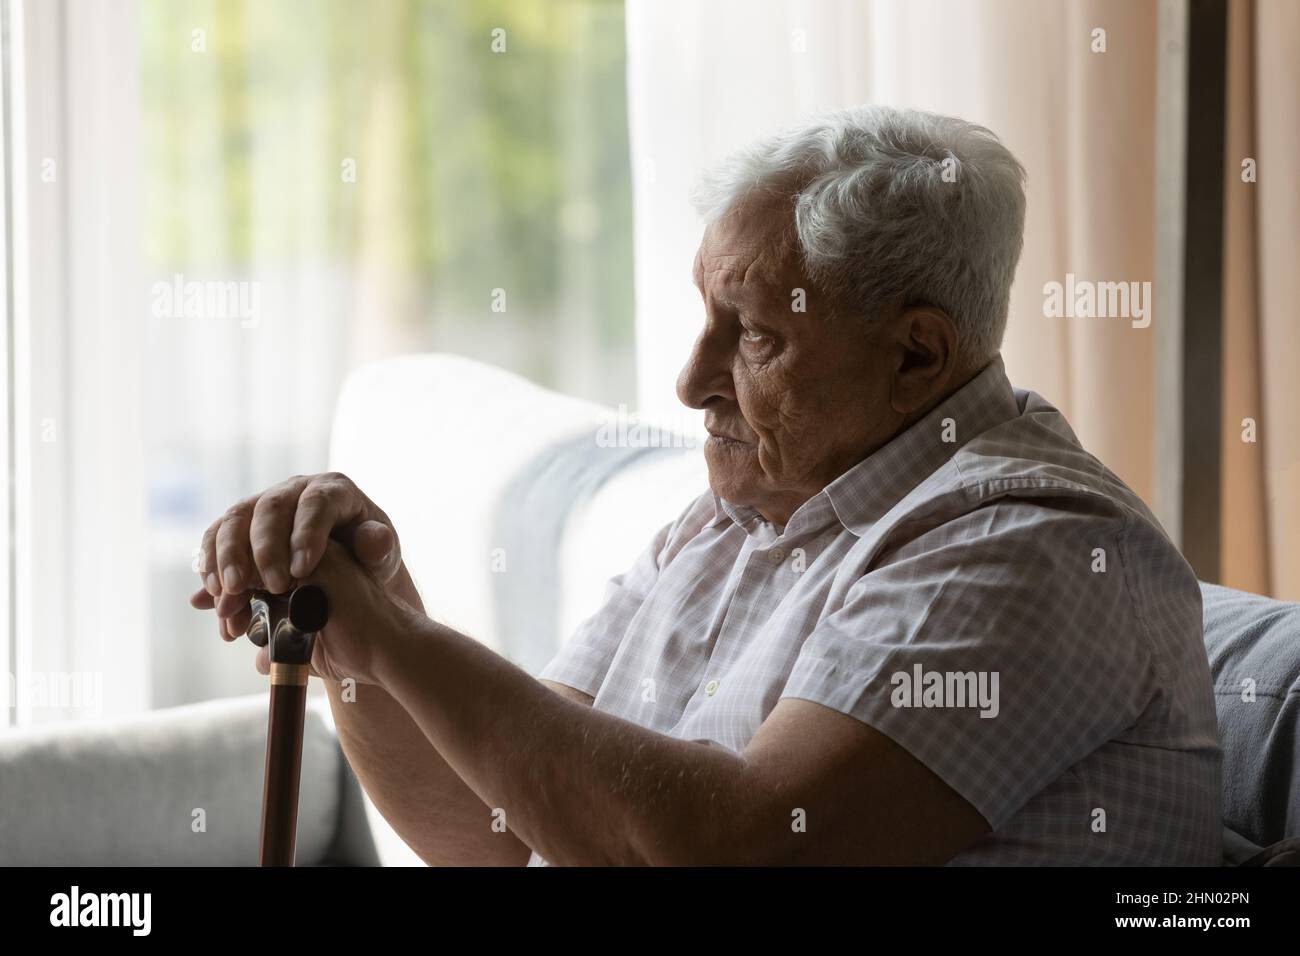 Sad depressed older 80s man holding gimp stick knob Stock Photo